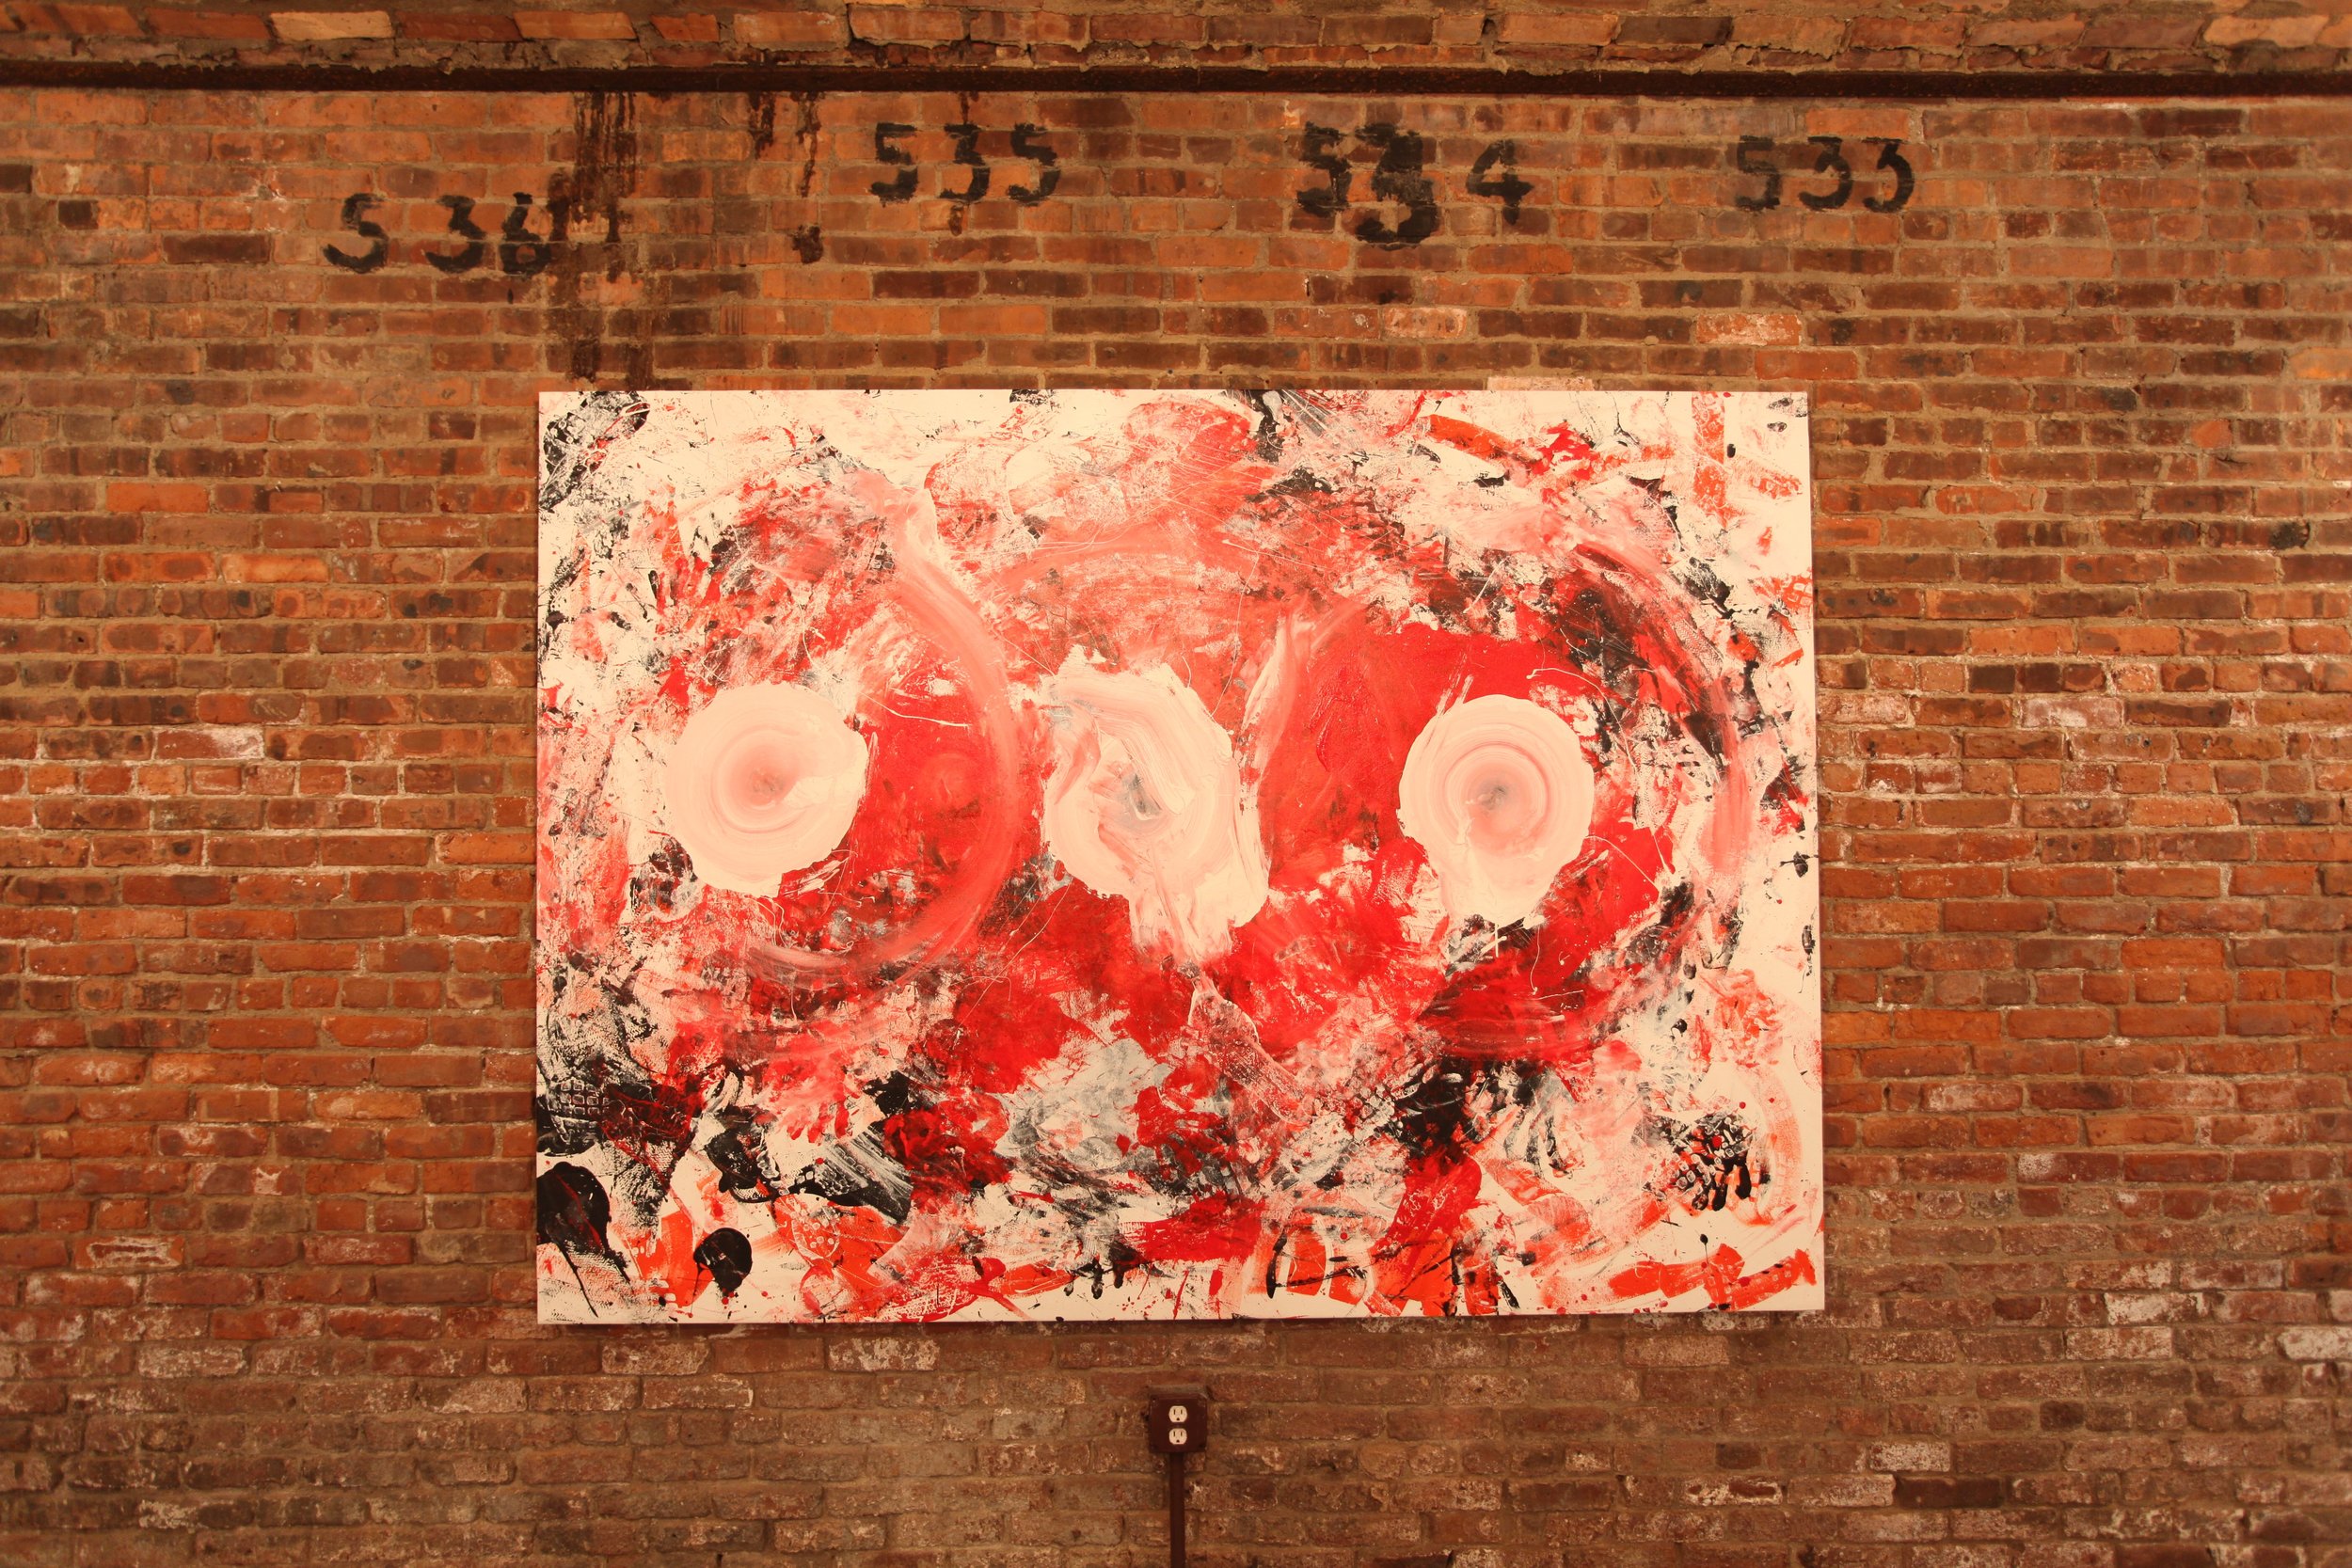  Installation View, 'Kill The Ego: Sound &amp; Vision',&nbsp; Brooklyn, New York, 2014 